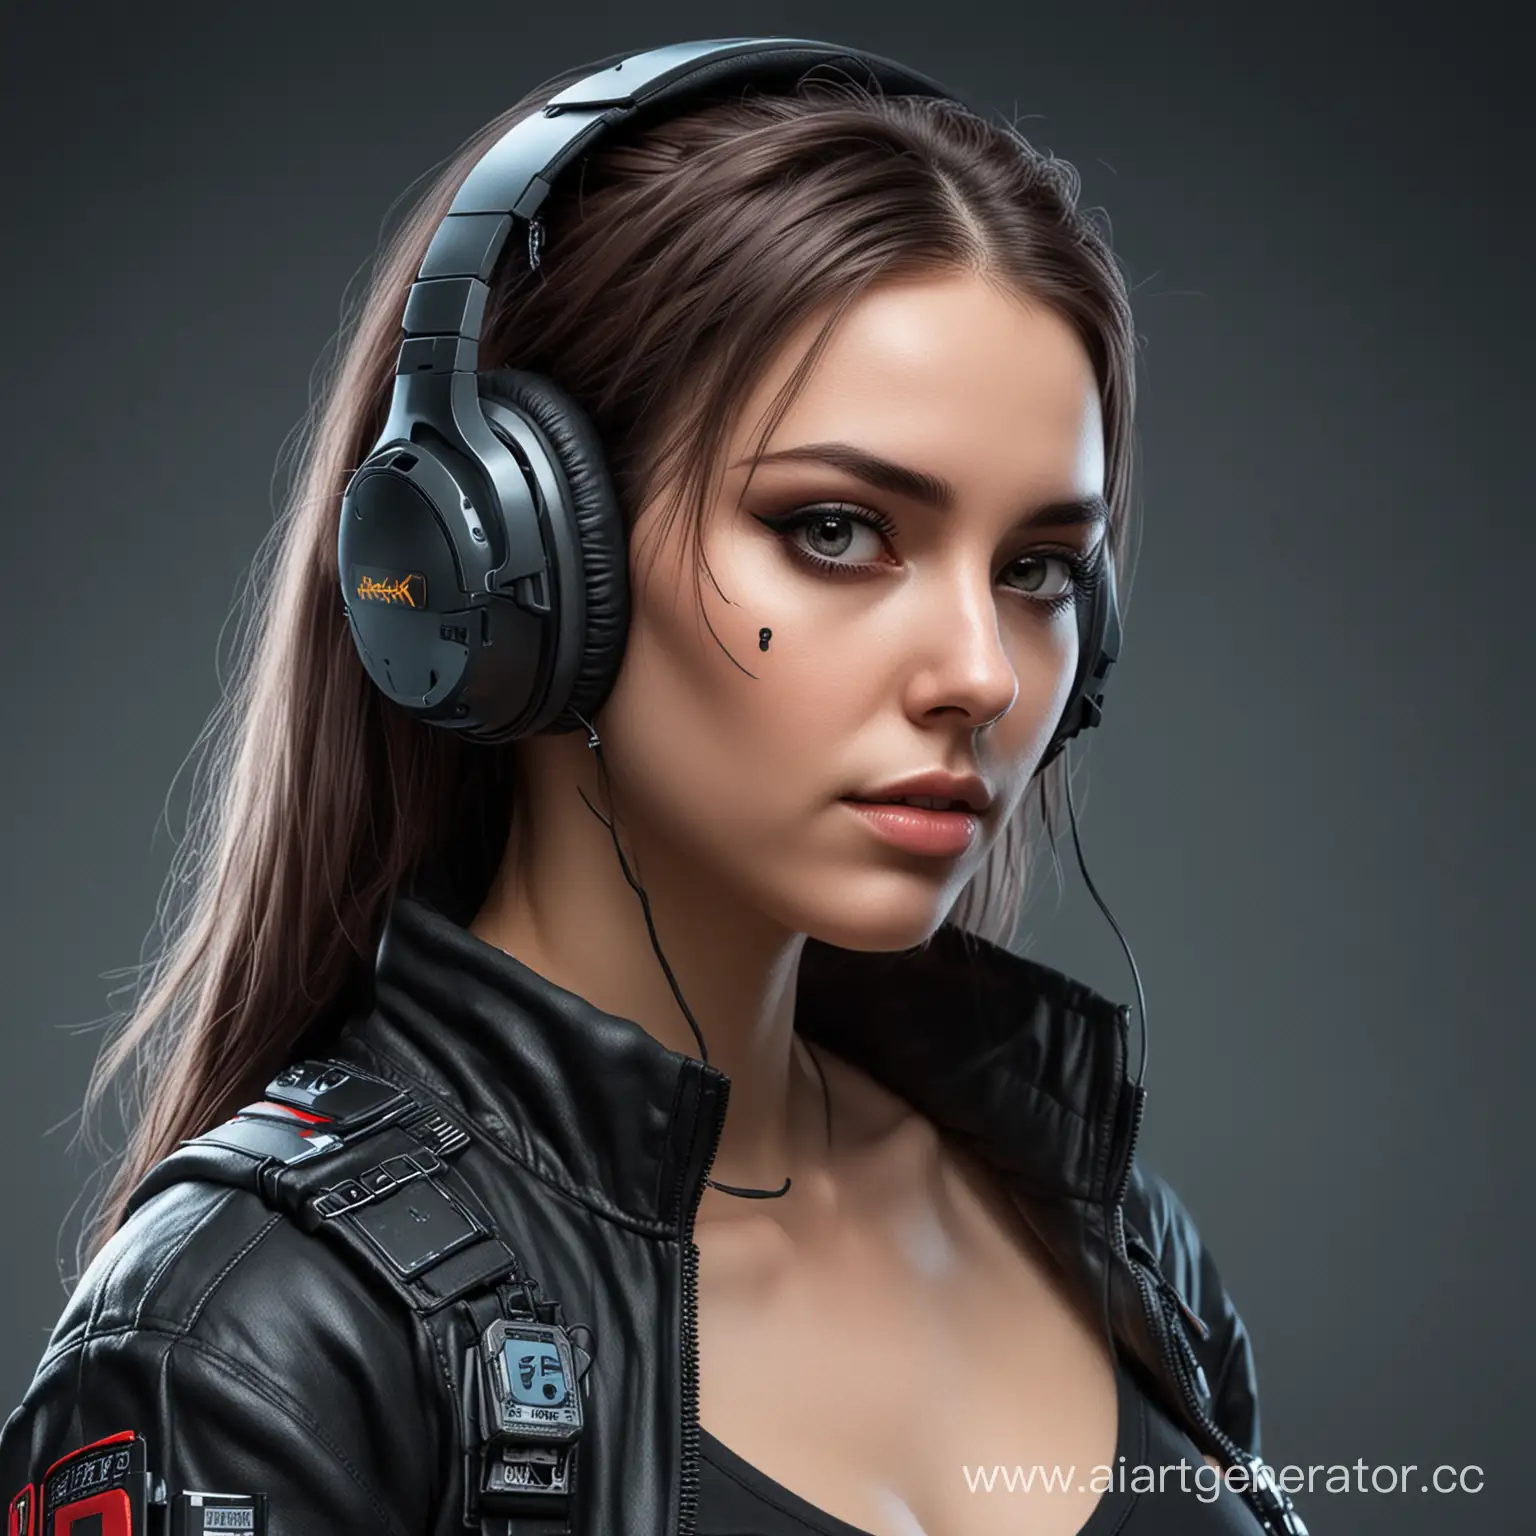 Futuristic-Girl-Wearing-Cyberpunk-Headphones